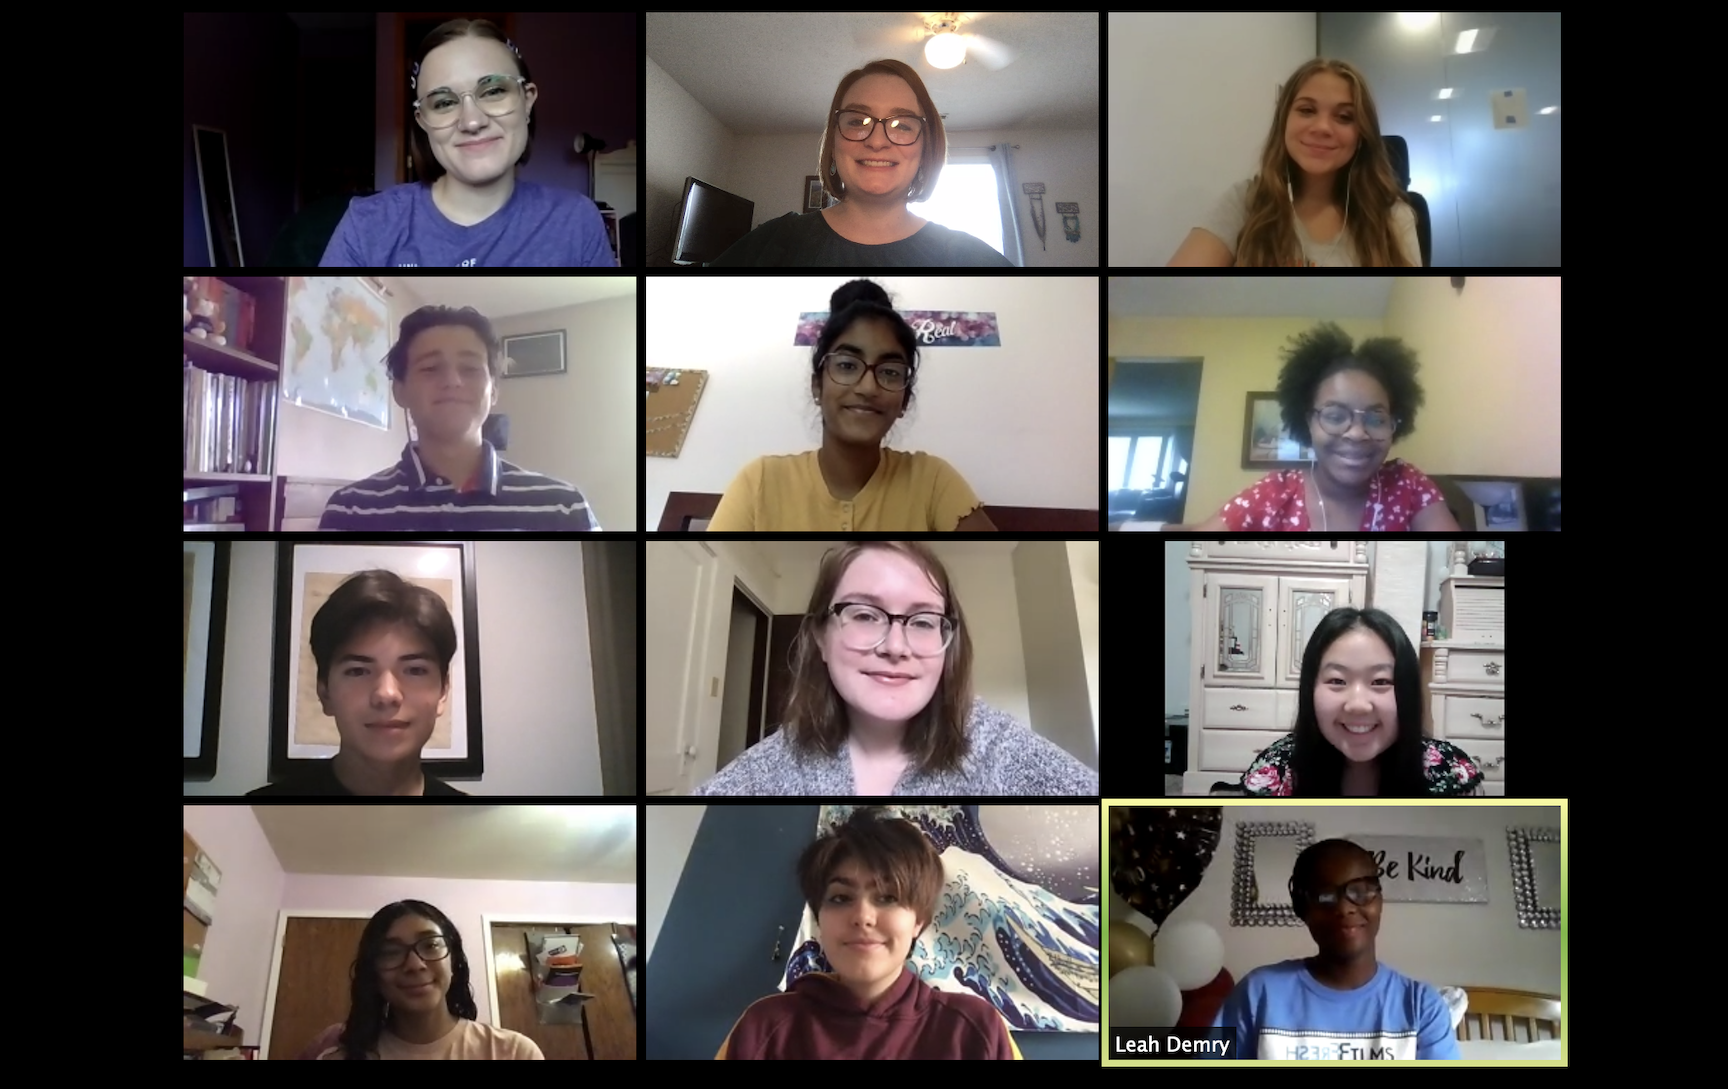 This is a screenshot of our virtual Digital Media Arts Camp Zoom call. It displays nine smiling Digital Media Art Camp students, and three threeSixty staff members.